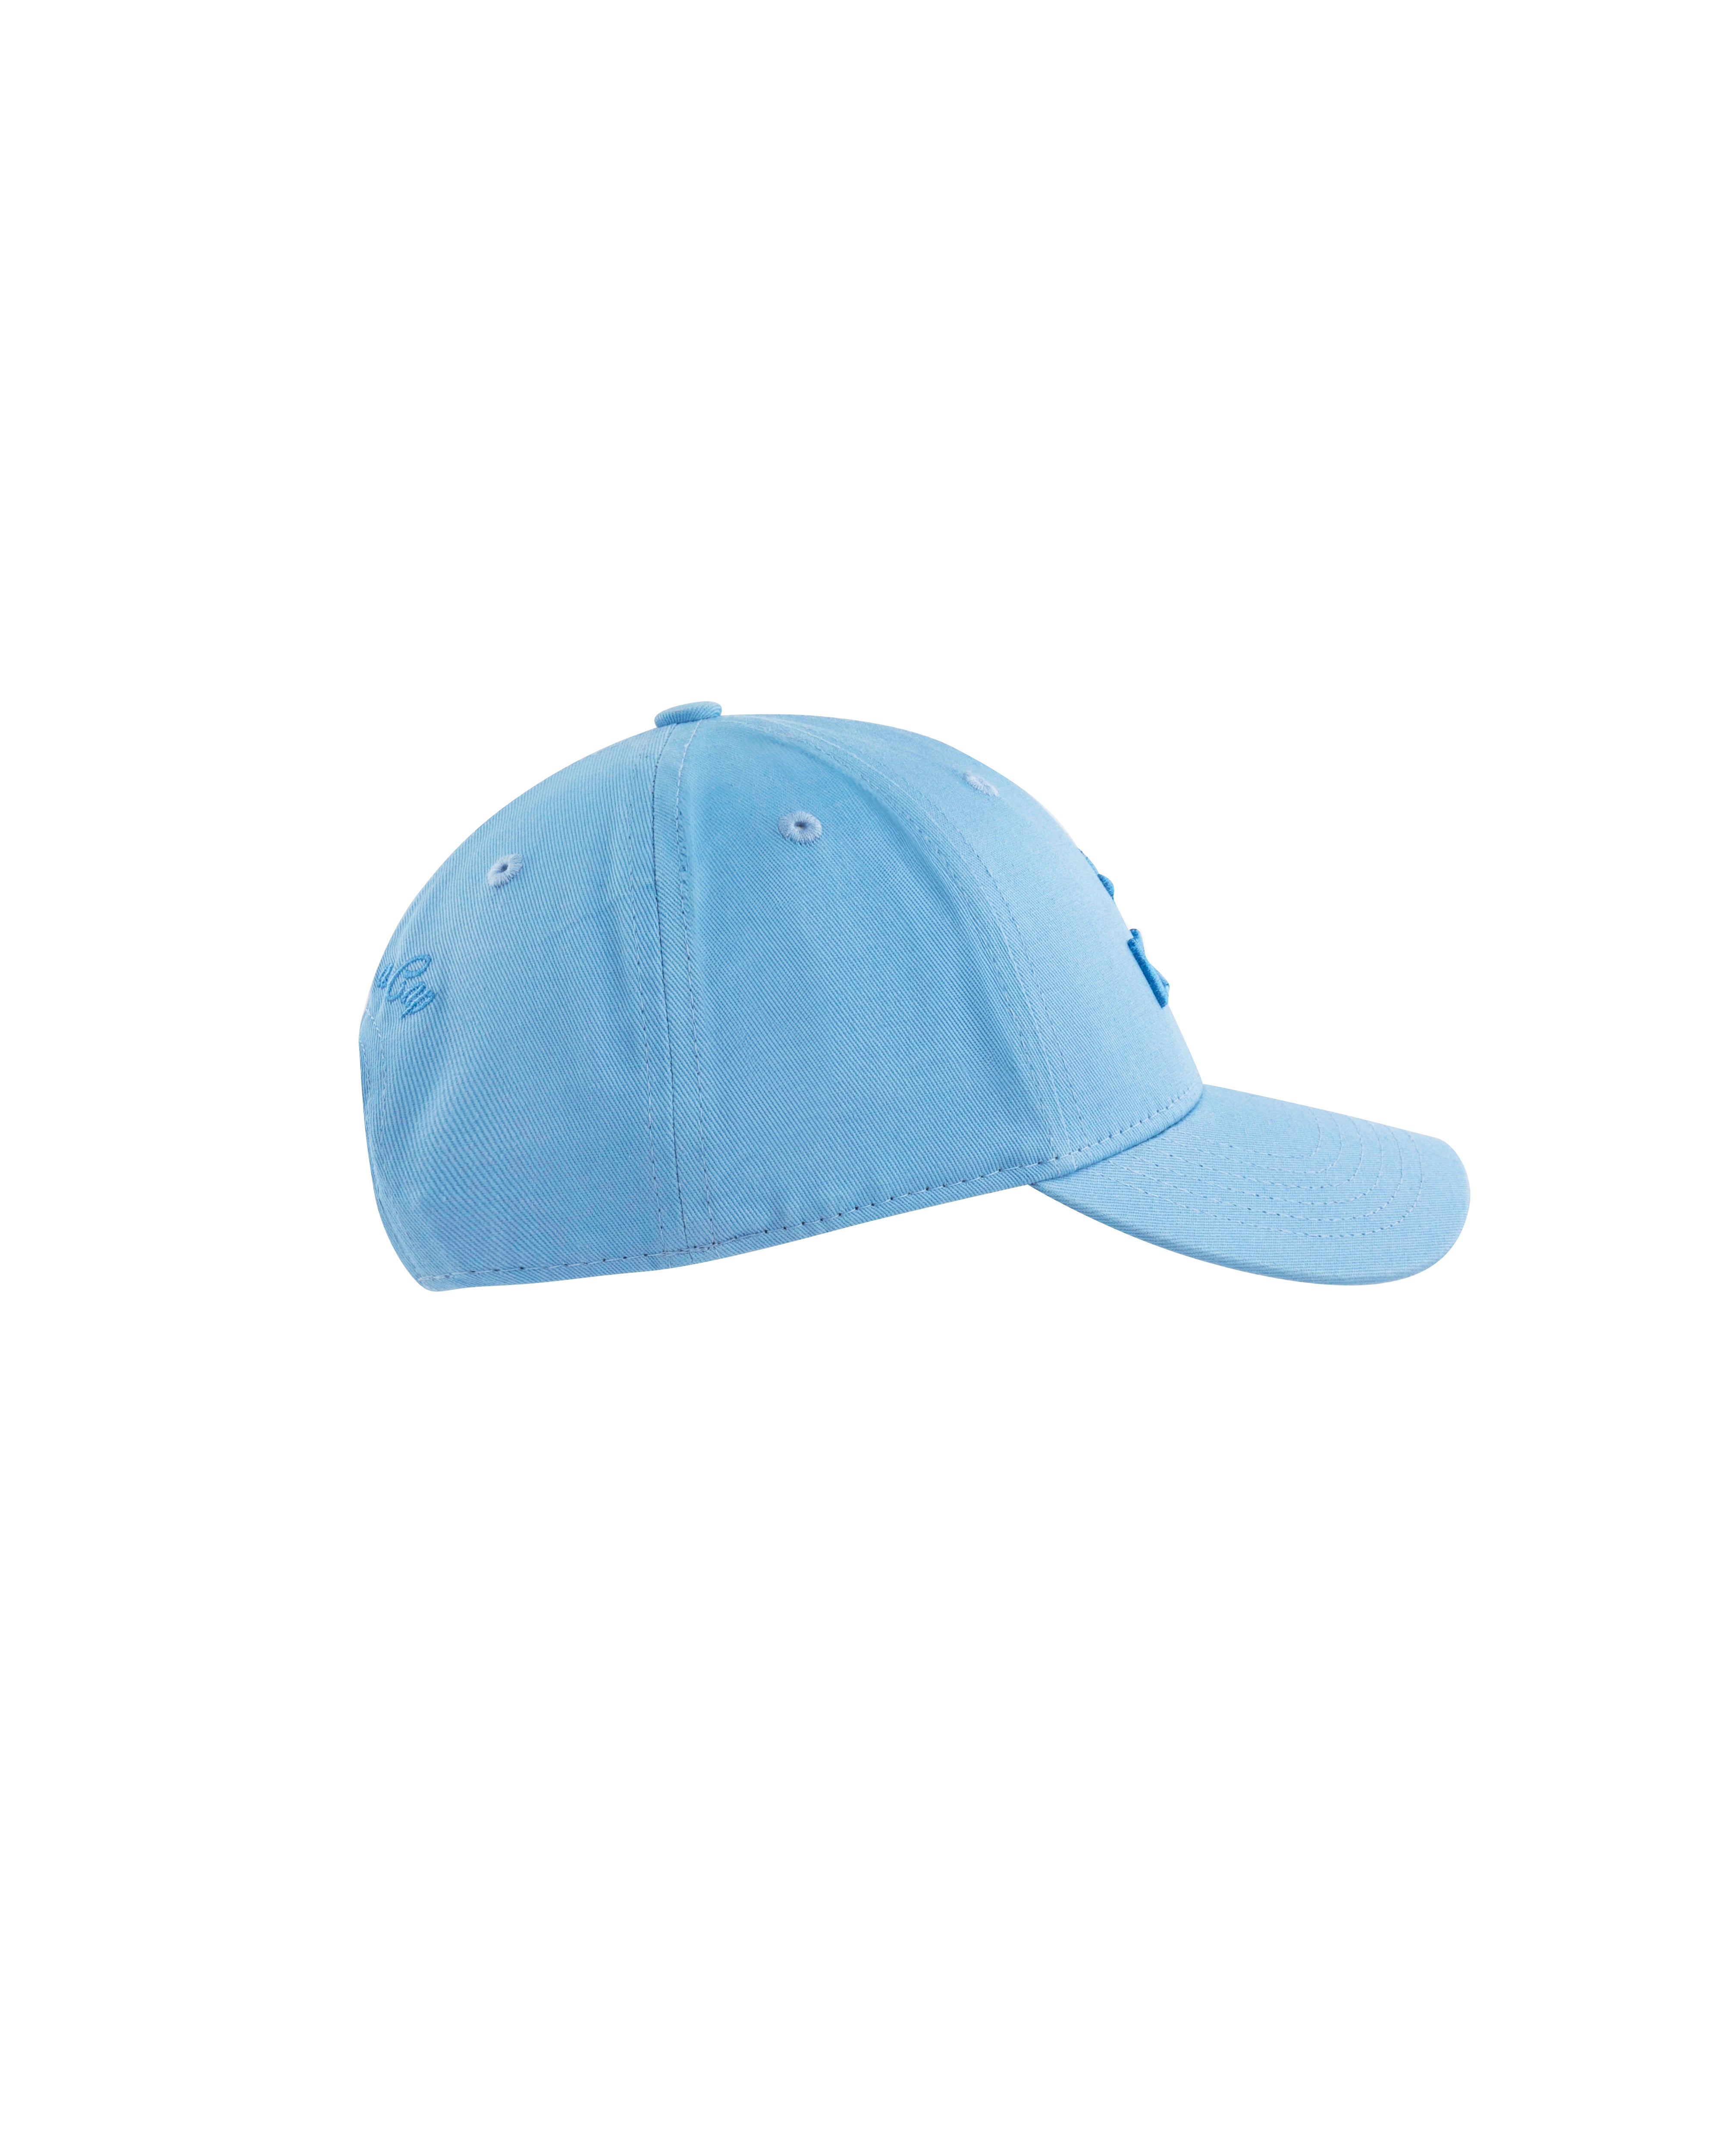 Children's Cap “Heritage” Cotton Pop Sky Blue